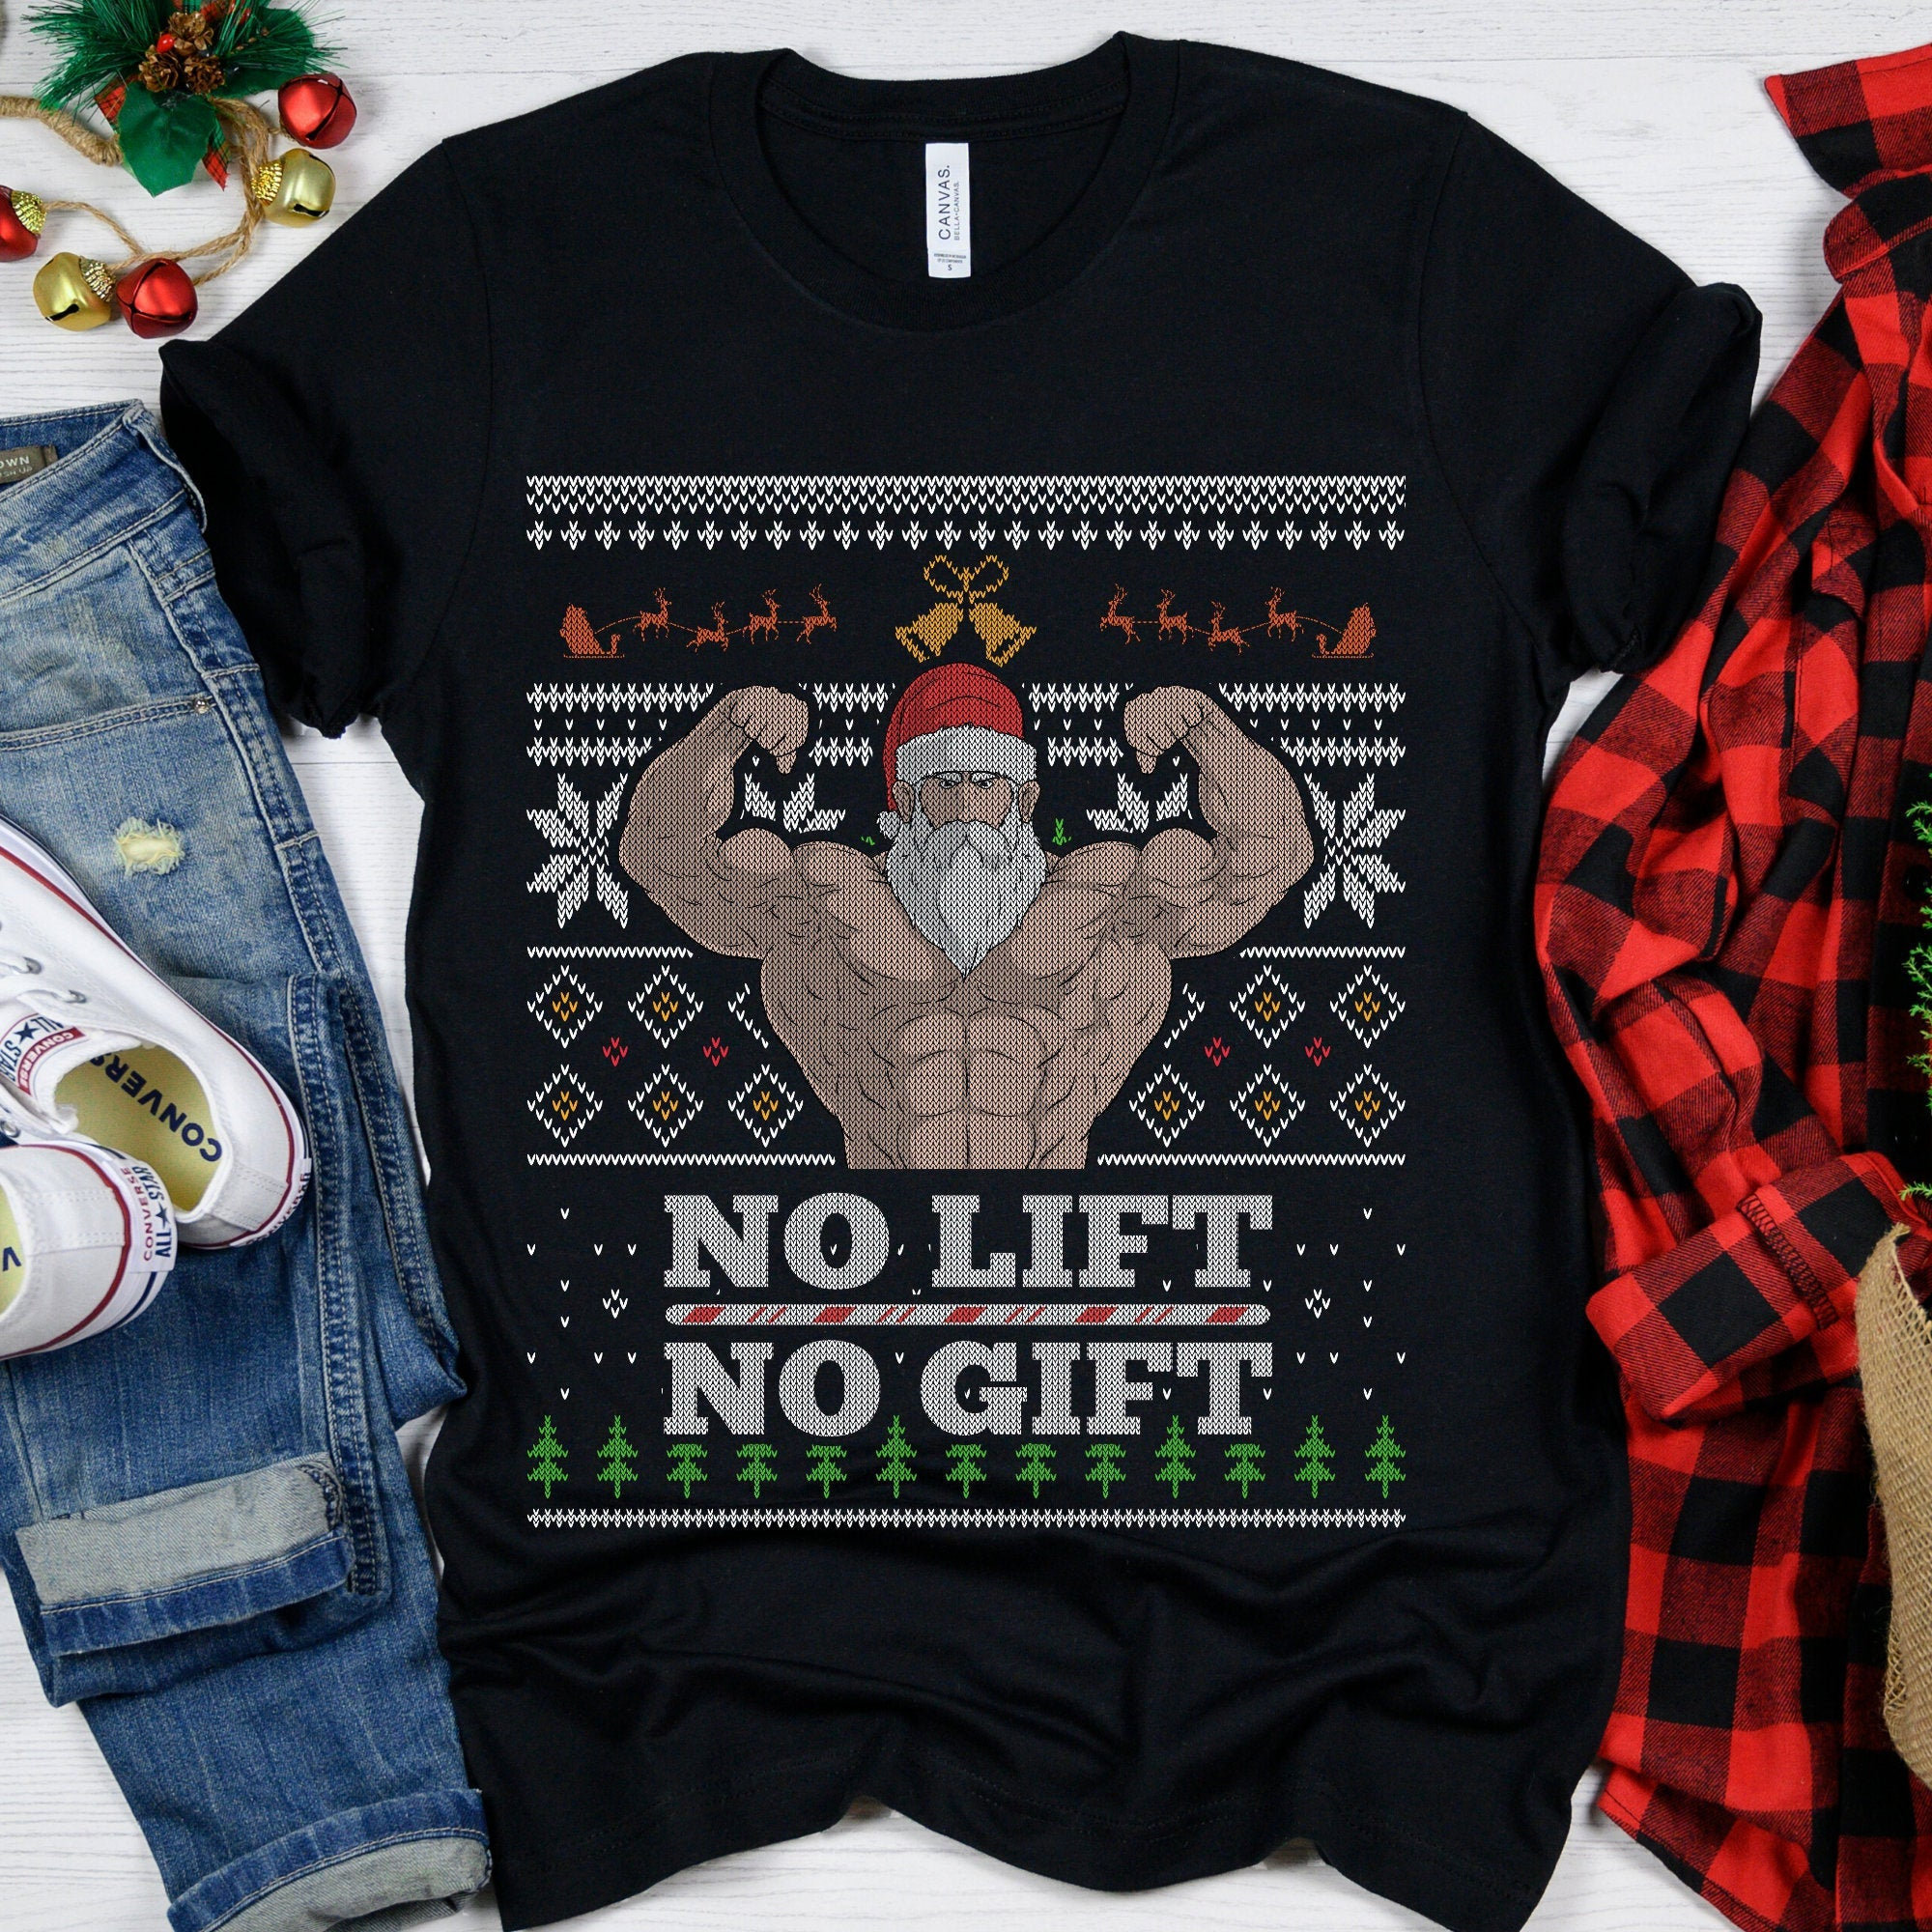 No Lift No Gift Funny Fitness Gift Ugly Christmas Santa Workout